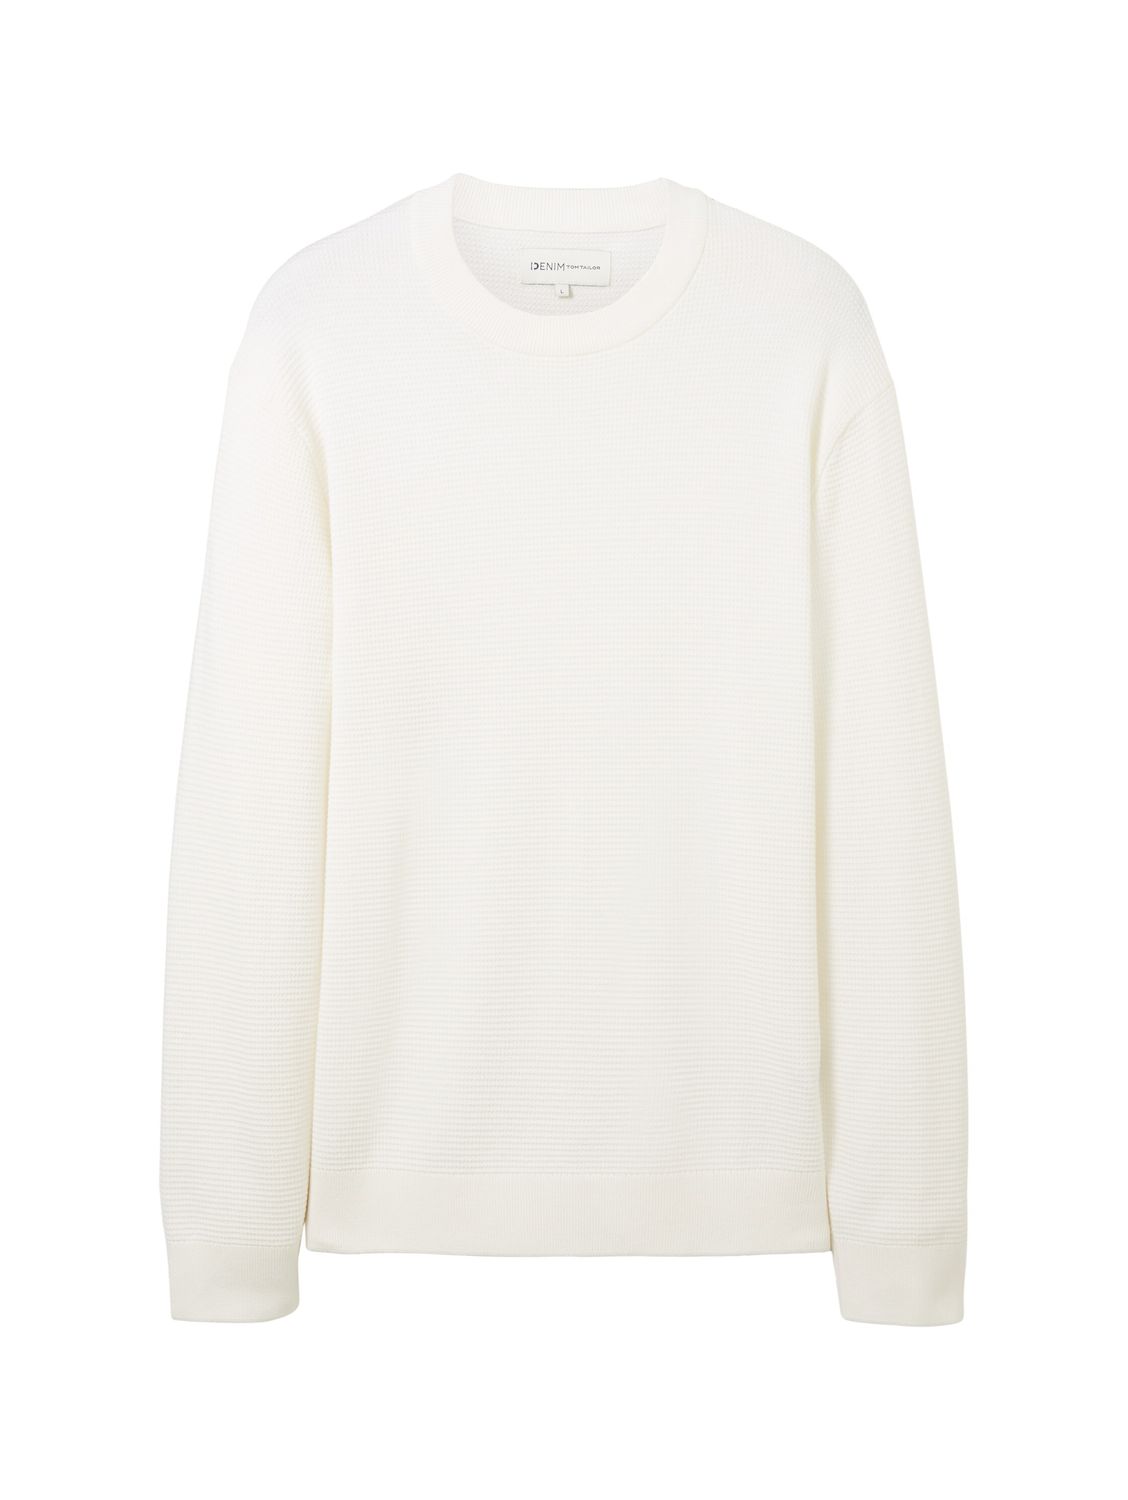 Пуловер TOM TAILOR Denim STRUCTURED BASIC, белый футболка tom tailor размер l белый голубой